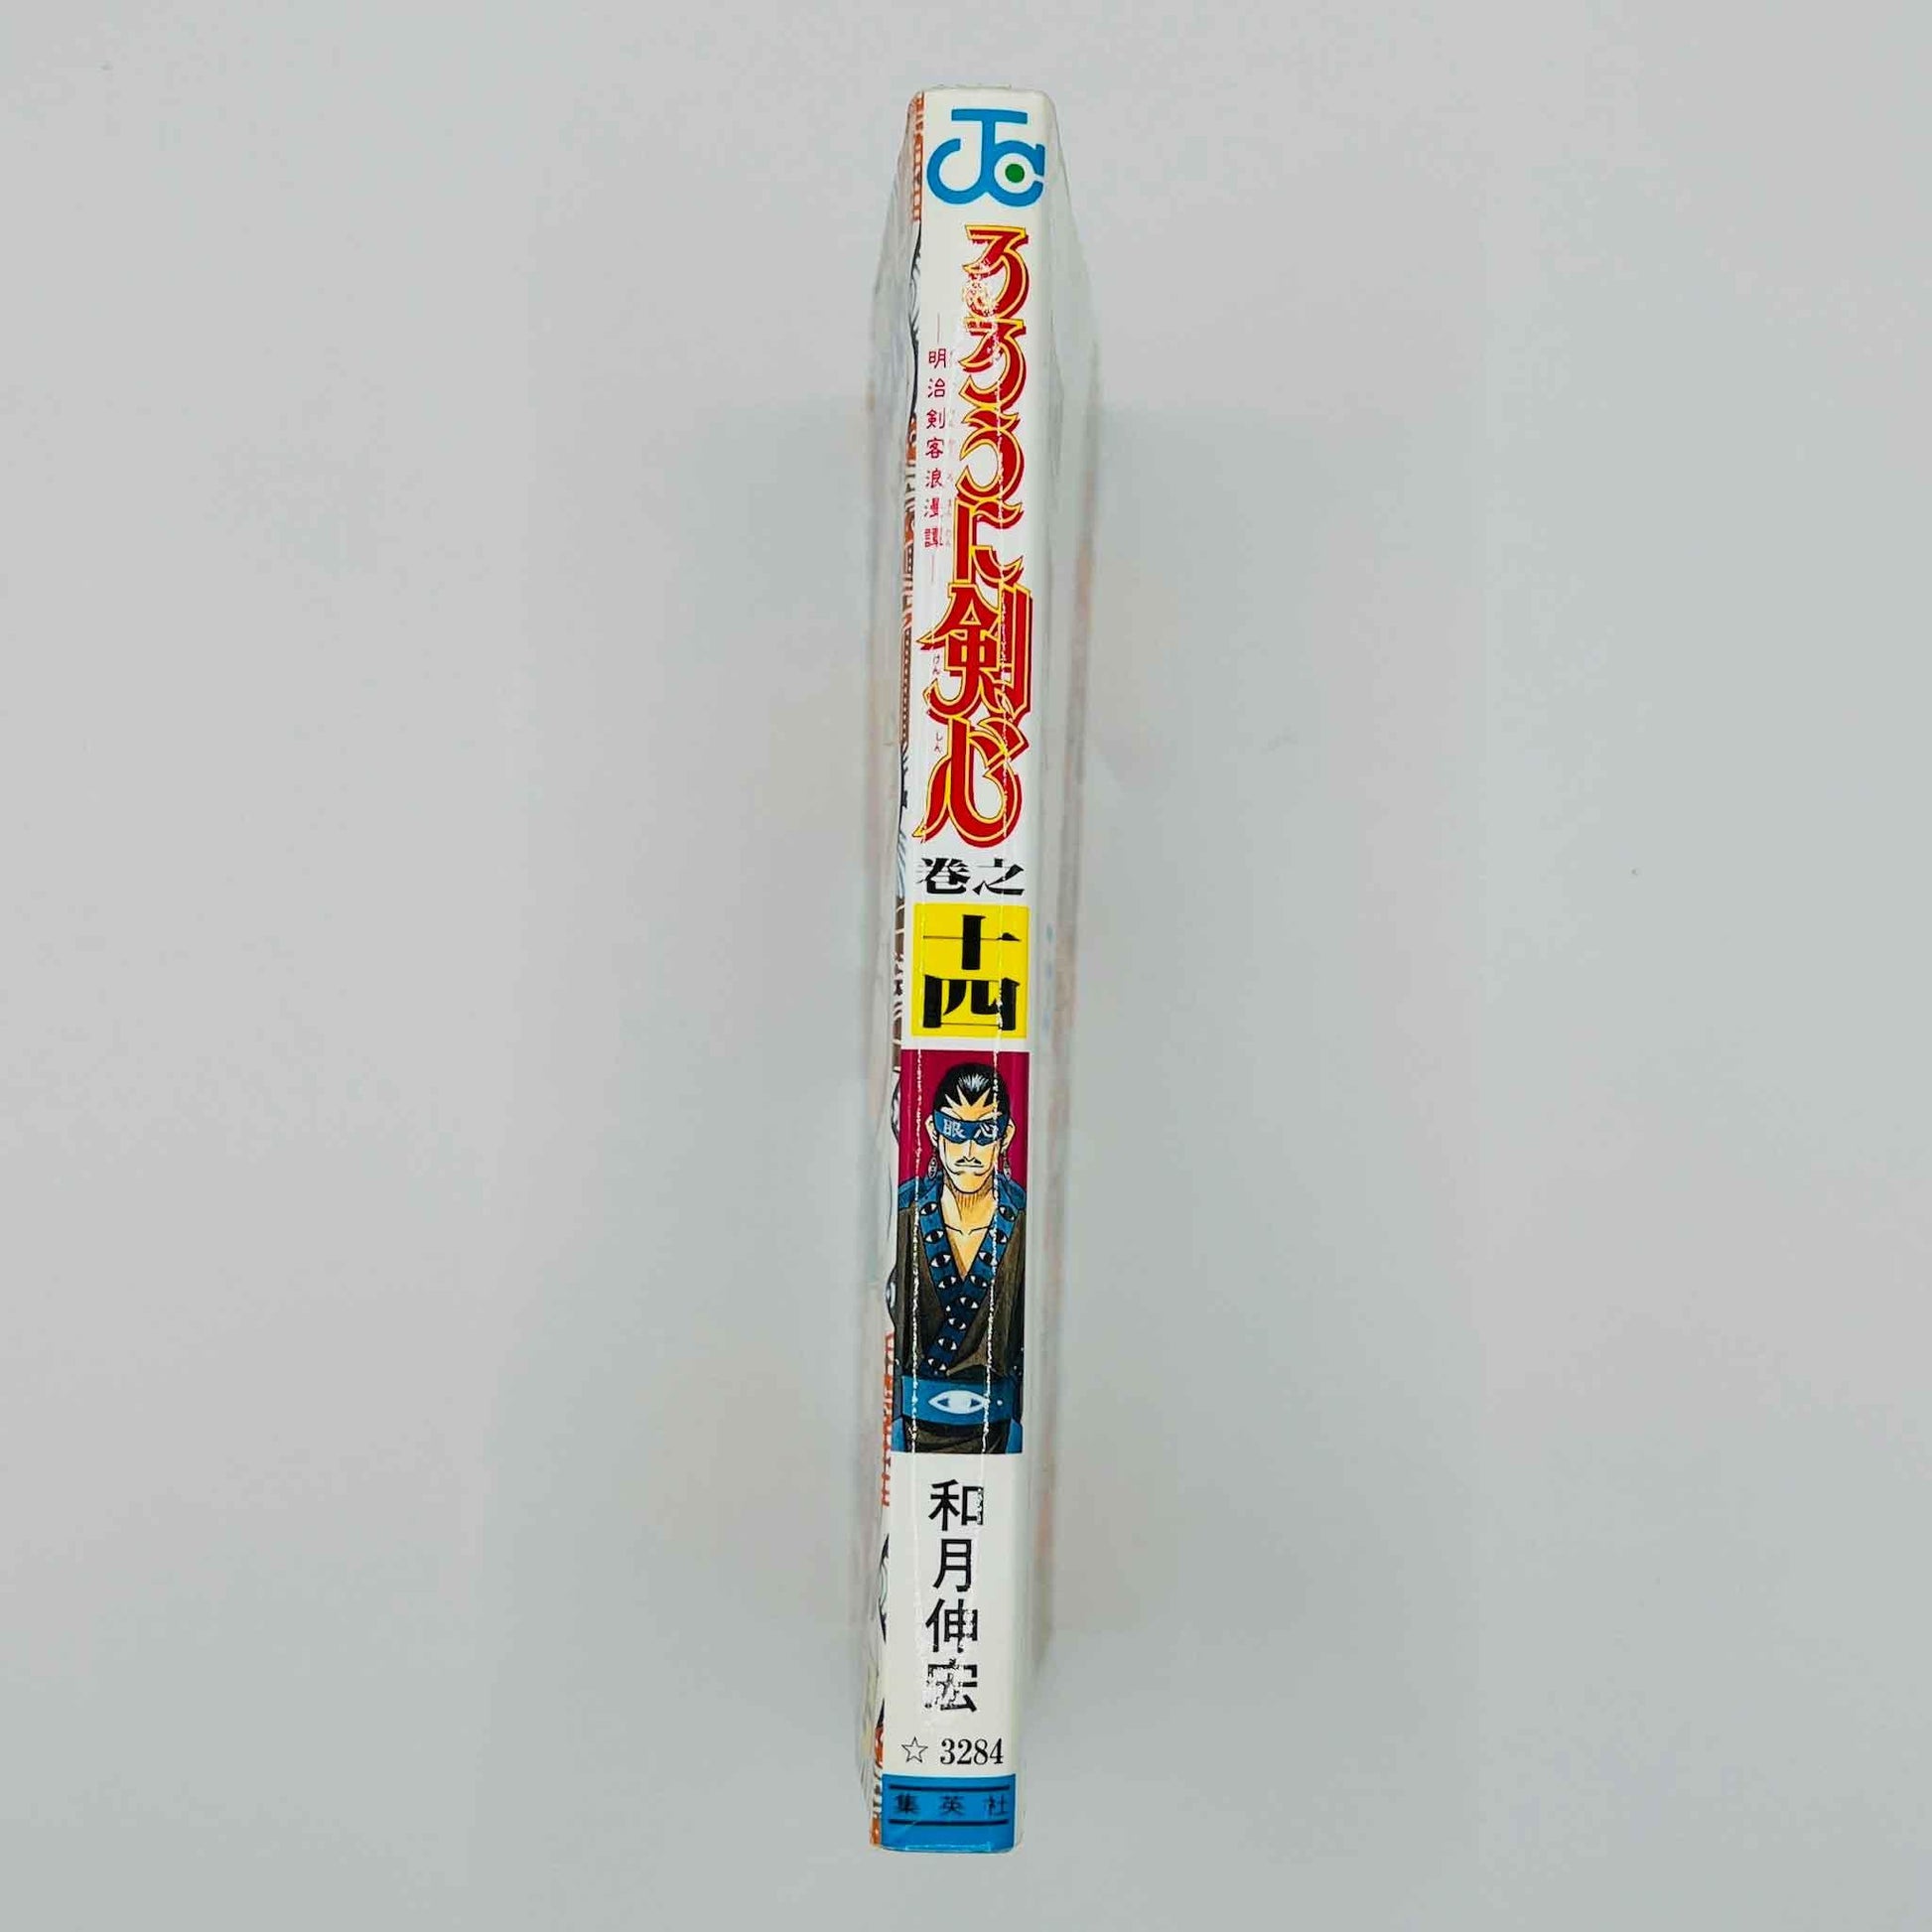 Rurouni Kenshin - Volume 14 - 1stPrint.net - 1st First Print Edition Manga Store - M-KENSH-14-001